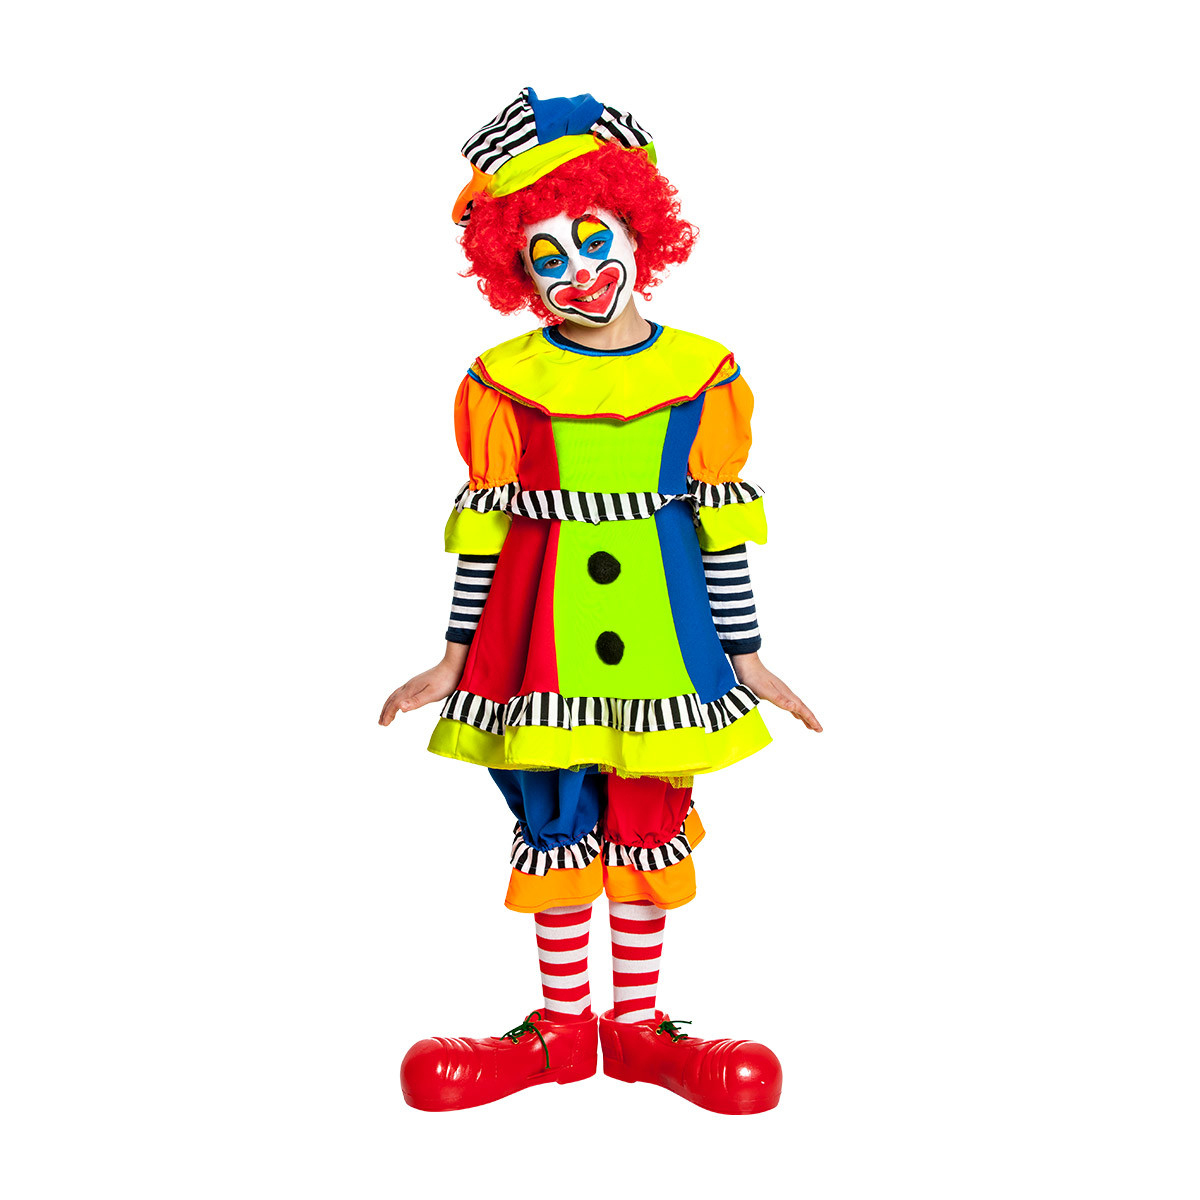 Mädchen Clown Kostüm Bunt | Kostümplanet® bei Clown Schminken Kinder Bilder